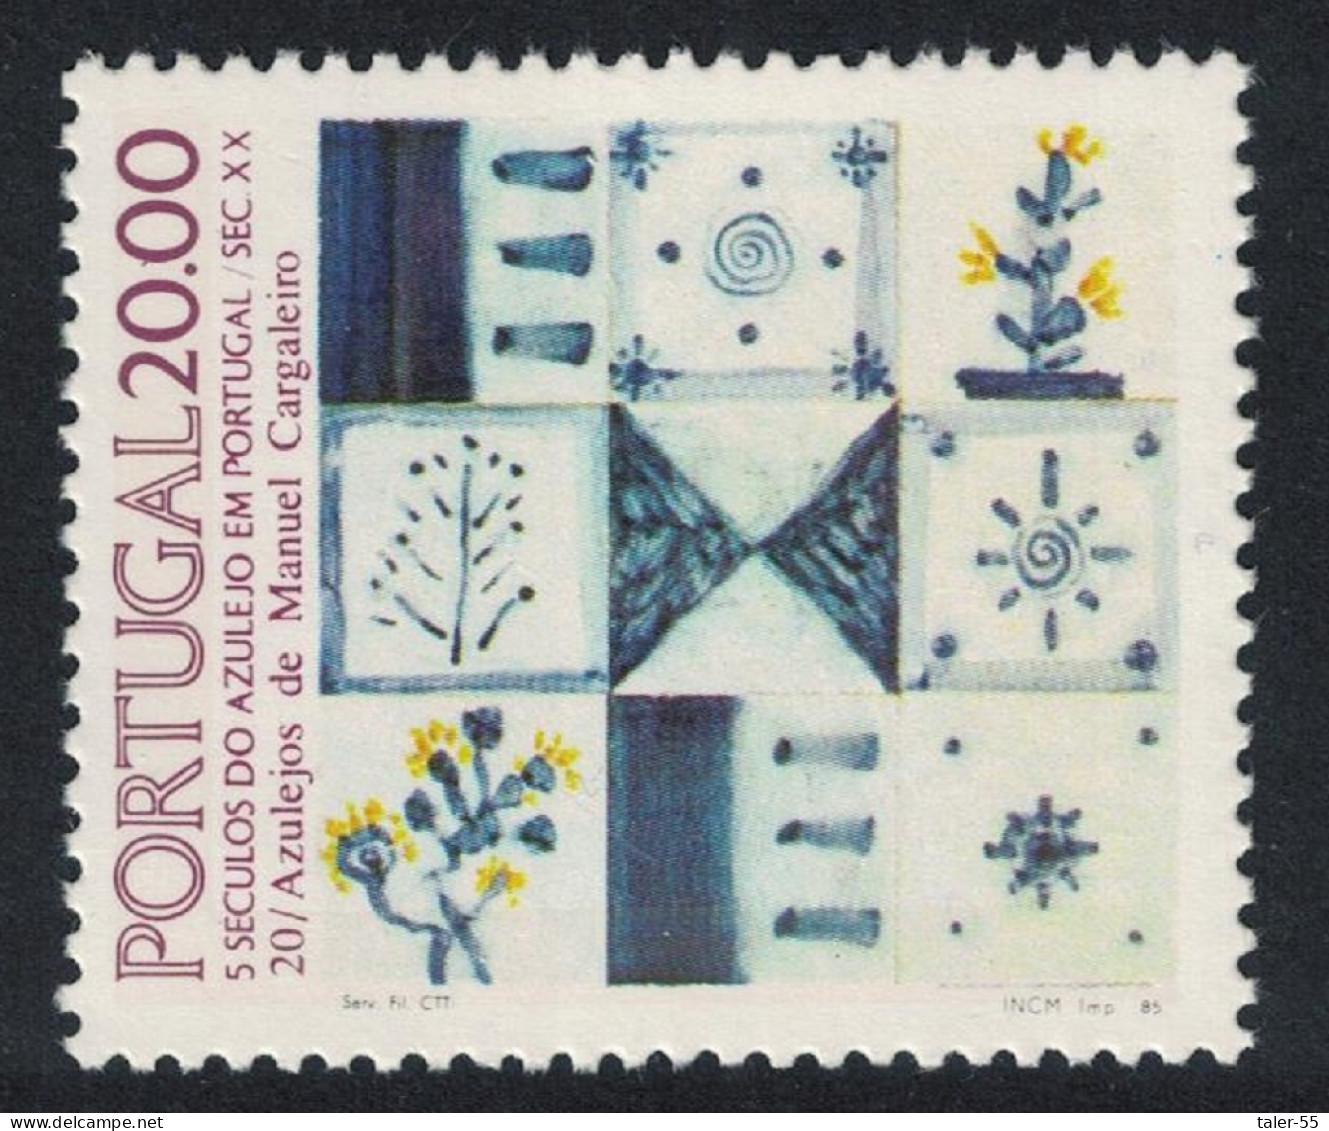 Portugal Tiles 20th Series 1985 MNH SG#2031 - Nuovi